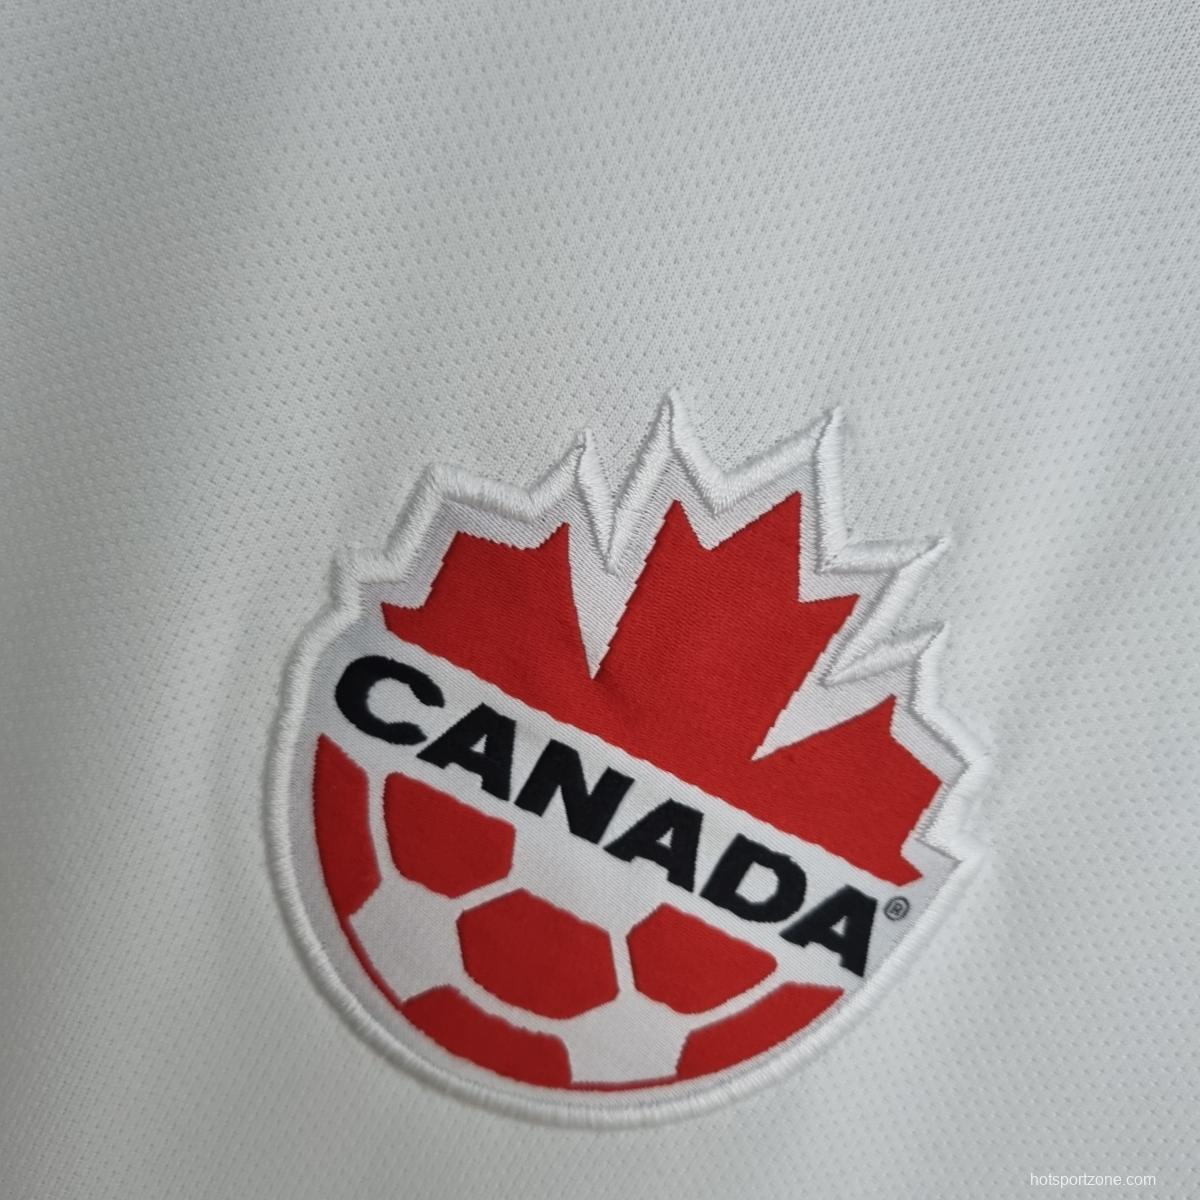 2022 Canada AWAY Soccer Jersey